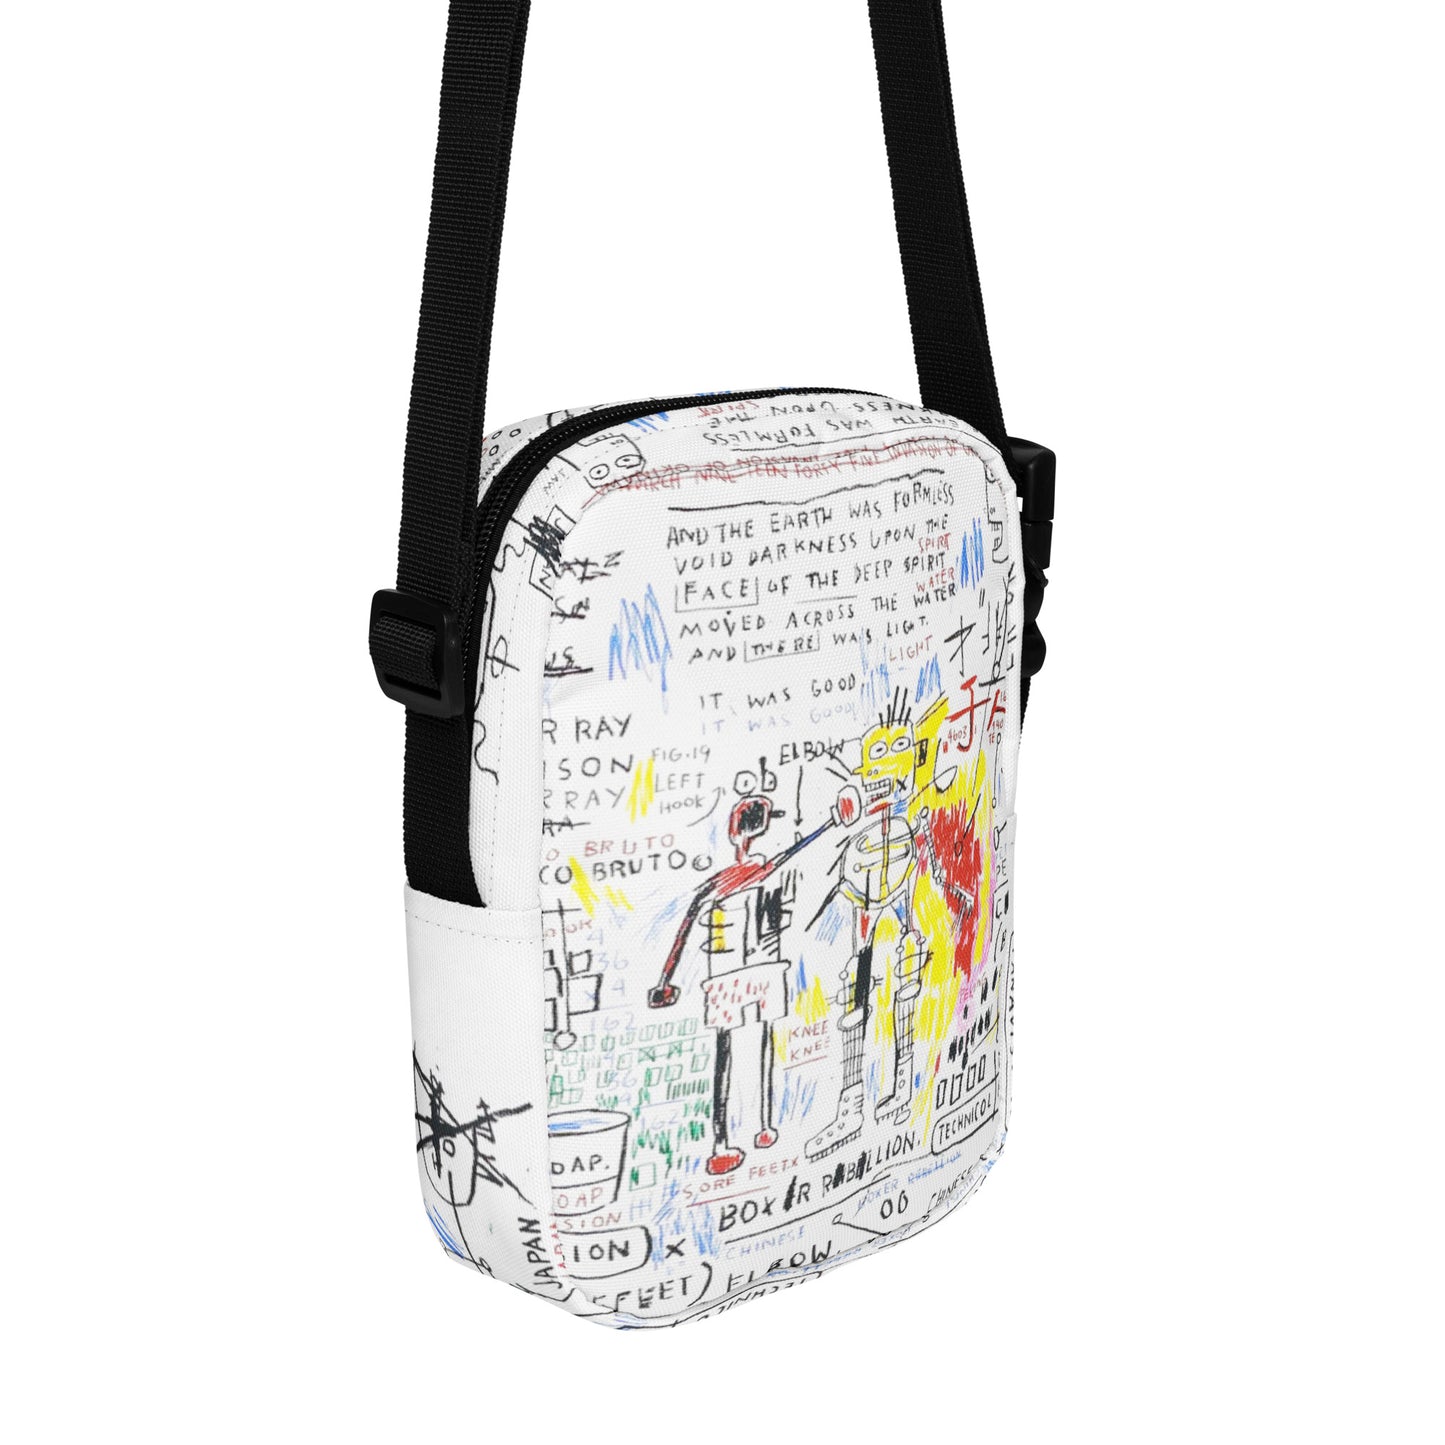 Jean-Michel Basquiat "Boxer Rebellion" Artwork Bag